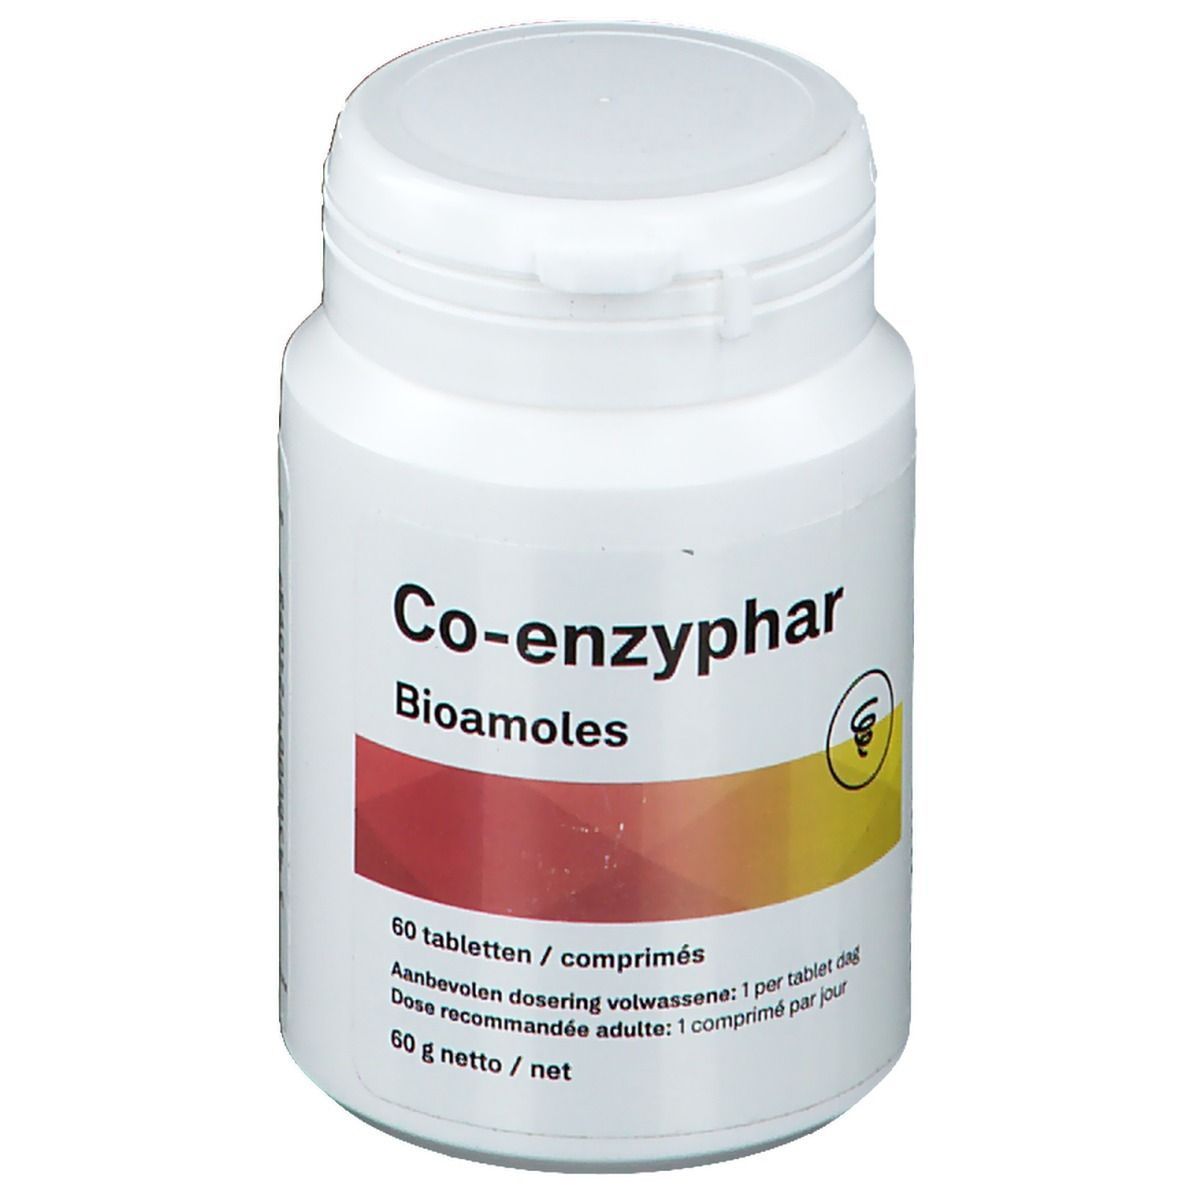 Bioamoles Co-enzyphar